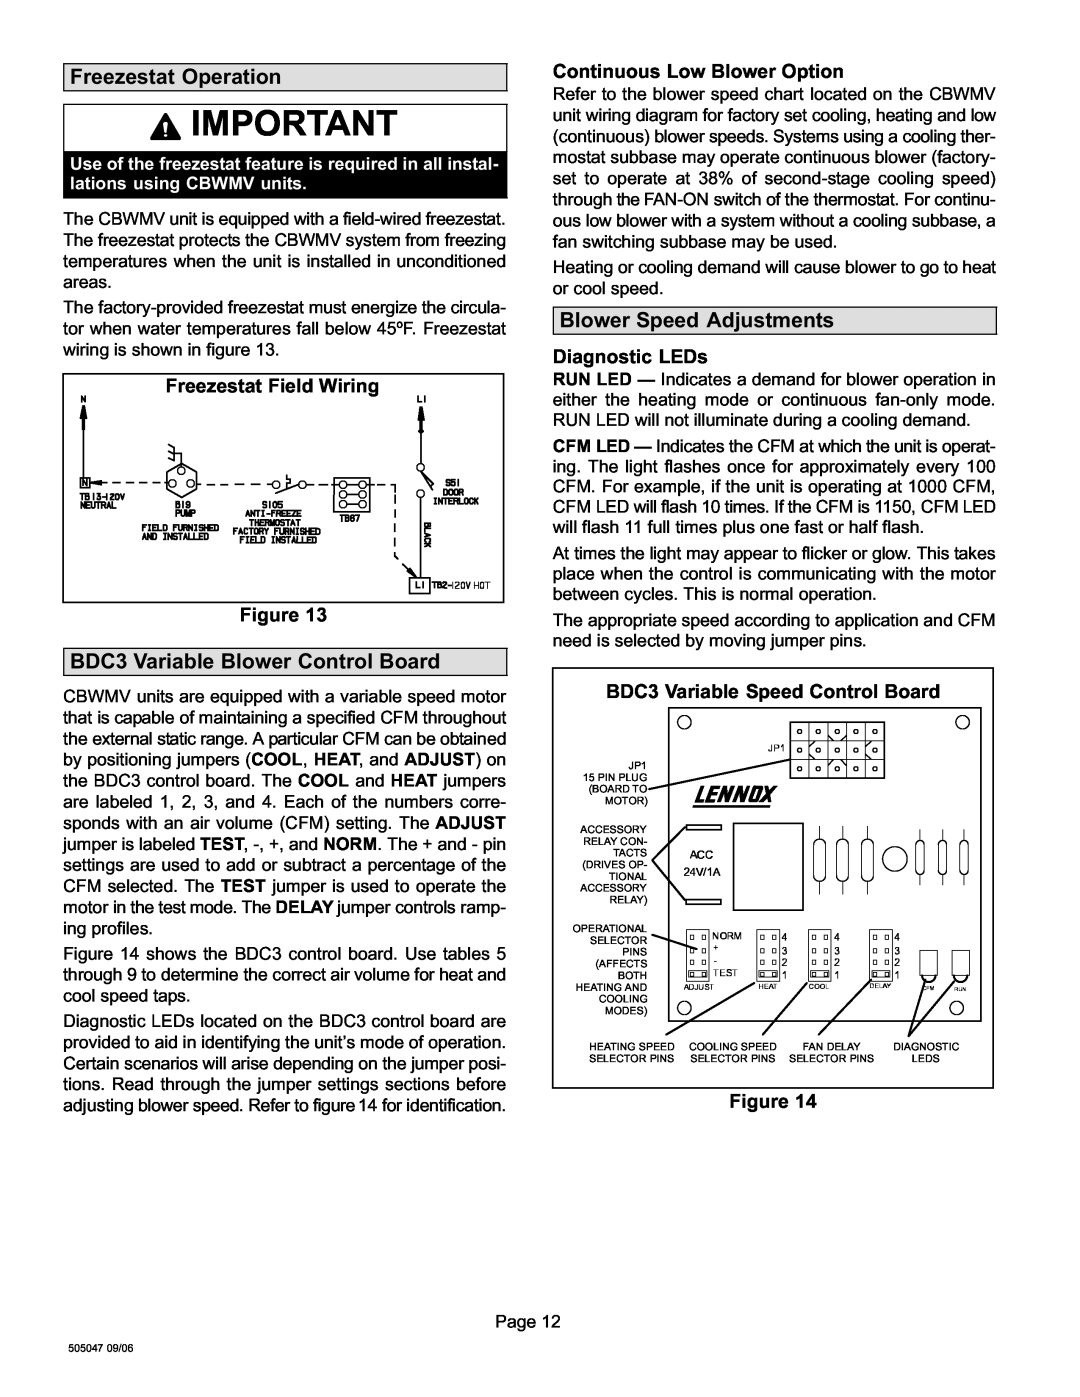 Lennox International Inc AIR HANDLERS Freezestat Operation, BDC3 Variable Blower Control Board, Blower Speed Adjustments 